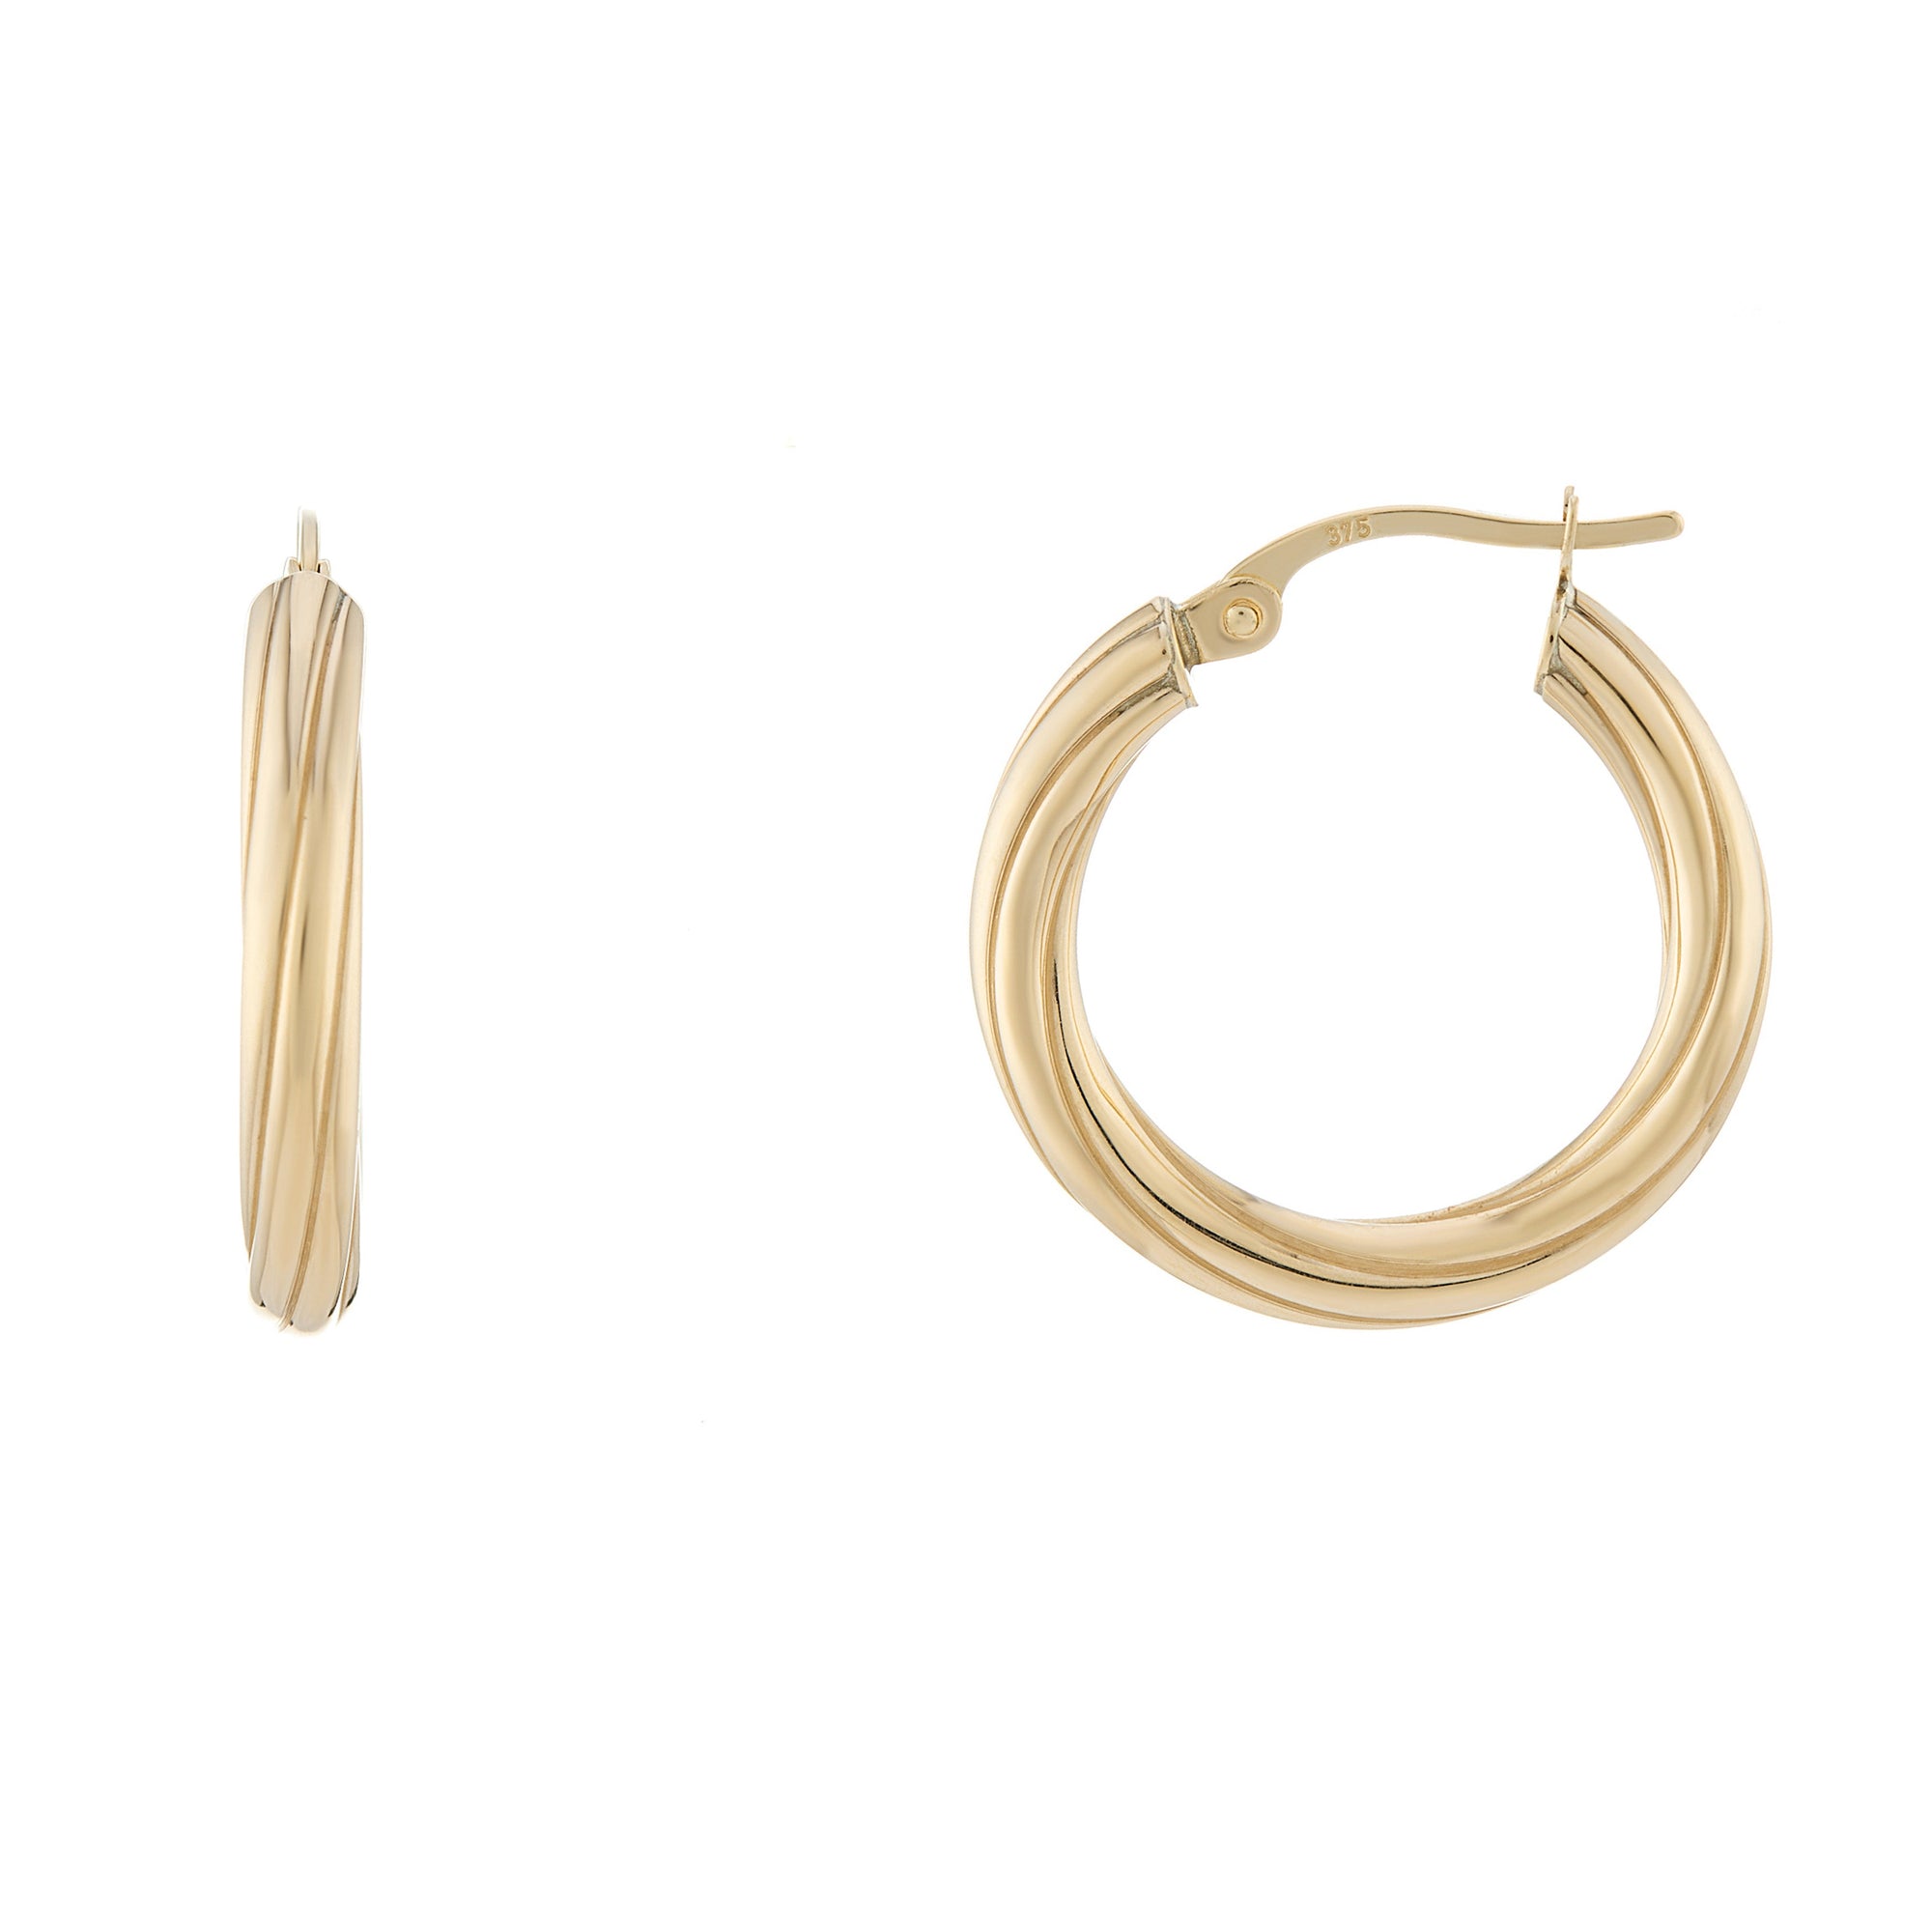 9ct gold 3mm x 15mm twisted hoop earrings